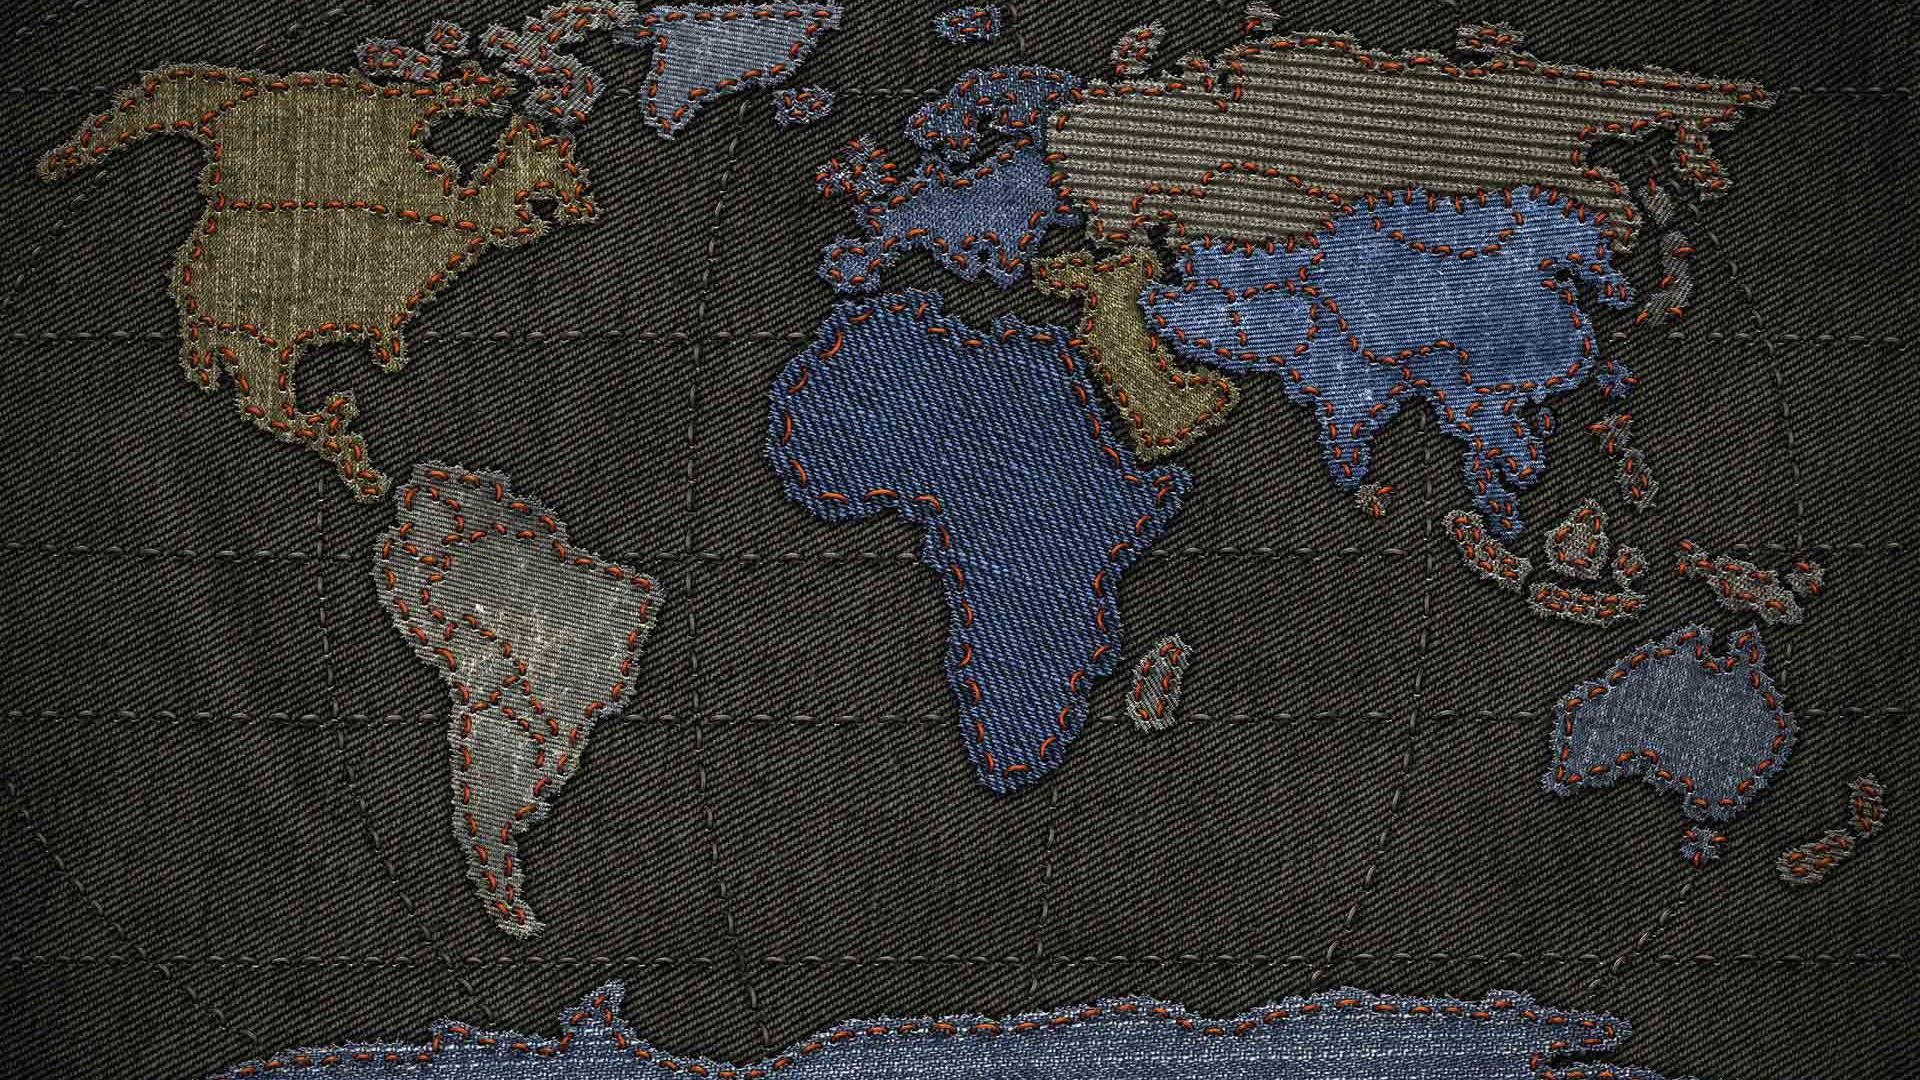 1920x1080  Cool world Map desktop wallpaper free download wide wallpapers :1280x800,1440x900,1680x1050